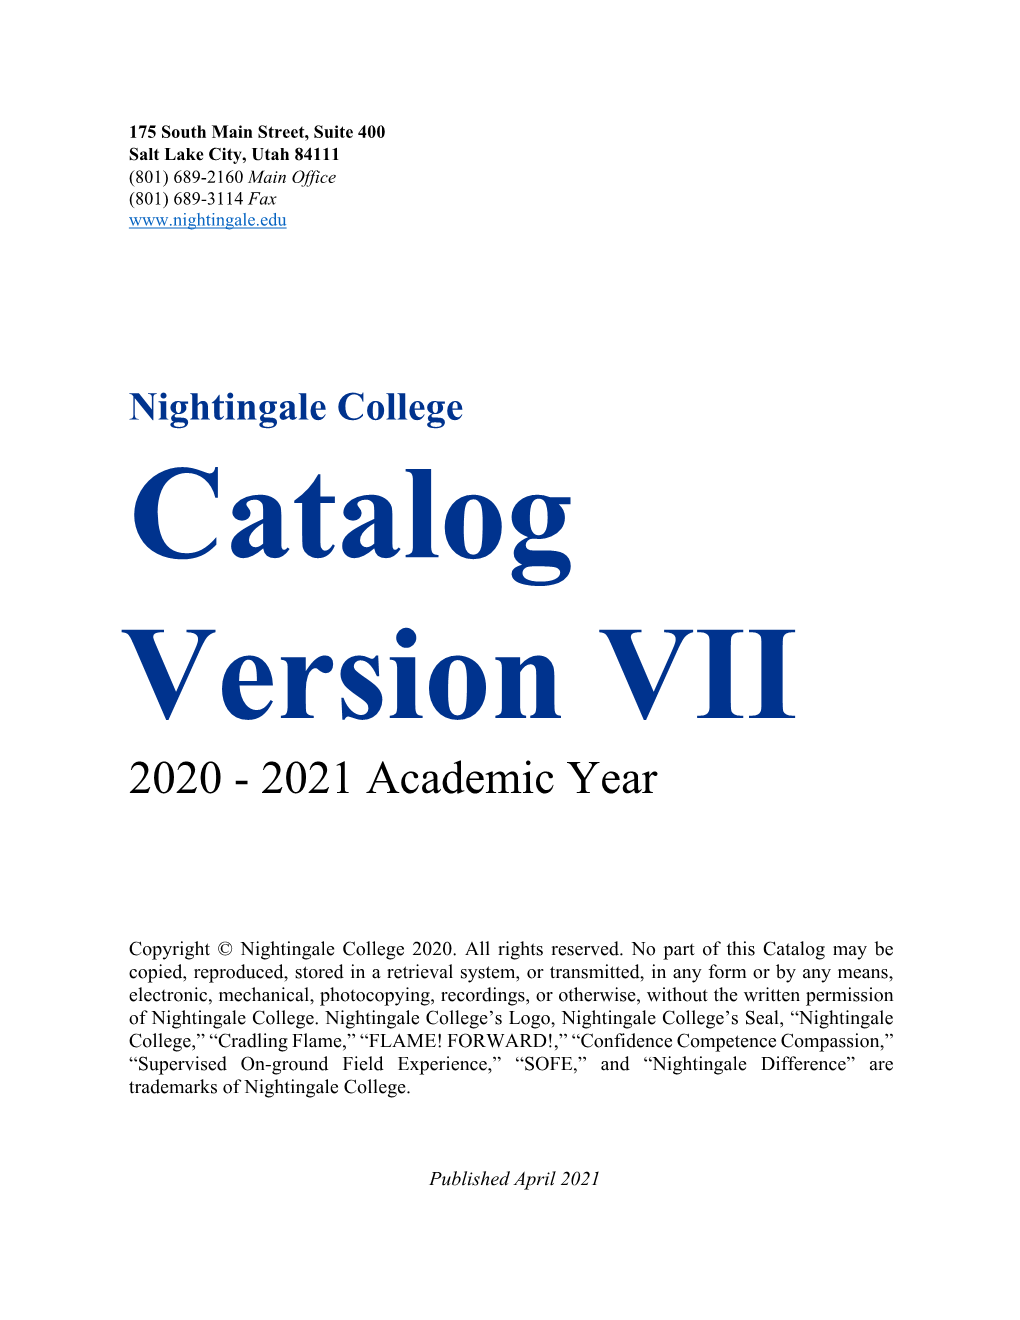 2020 - 2021 Academic Year